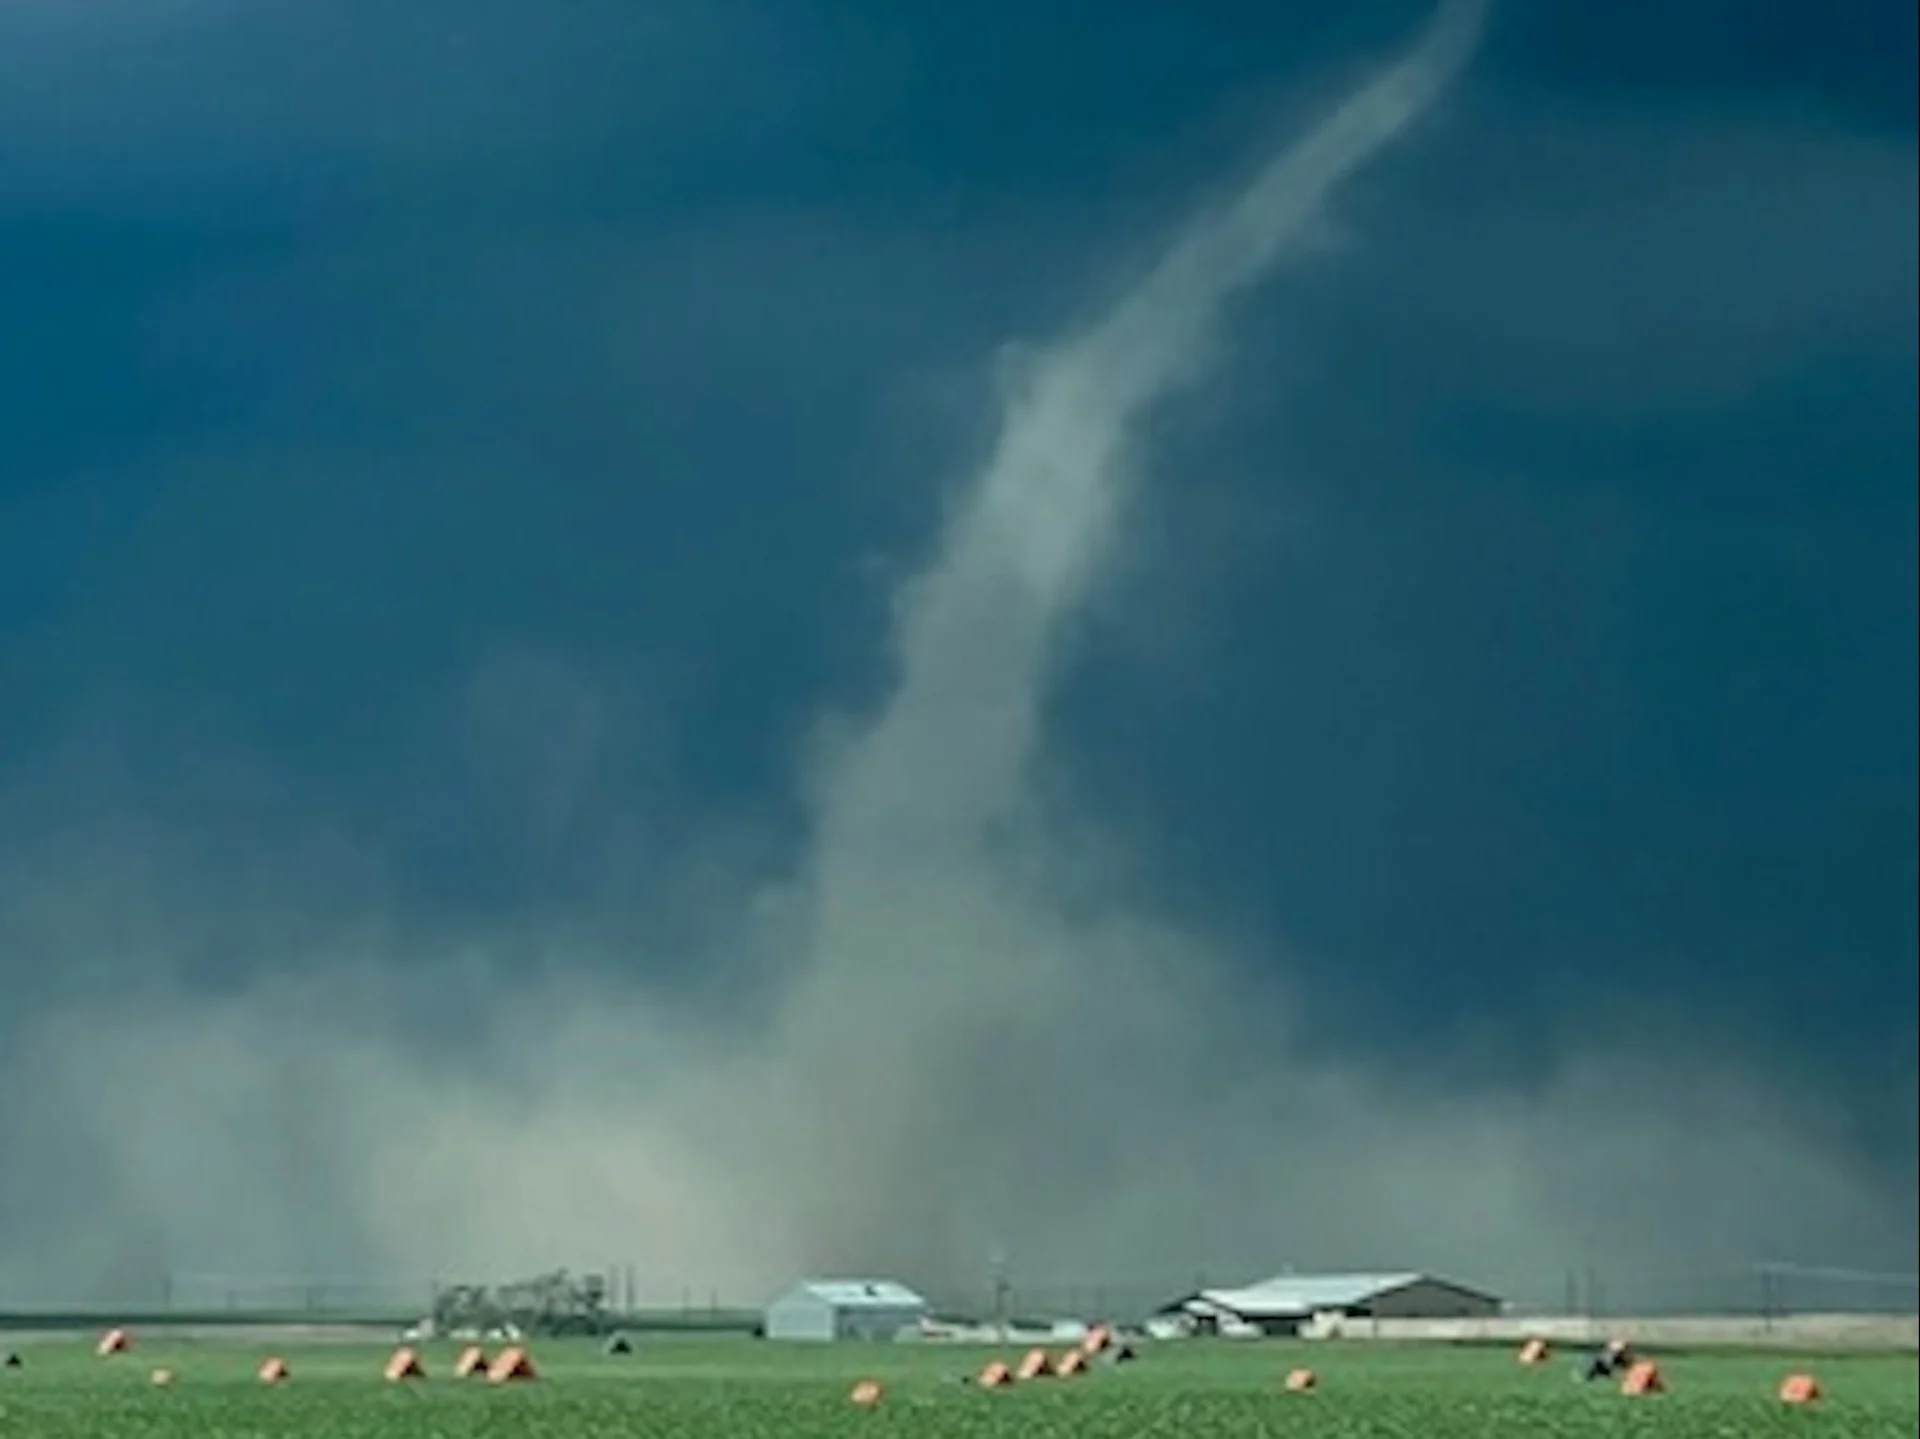 PHOTOS: Ten tornadoes confirmed in Alberta outbreak on Wednesday